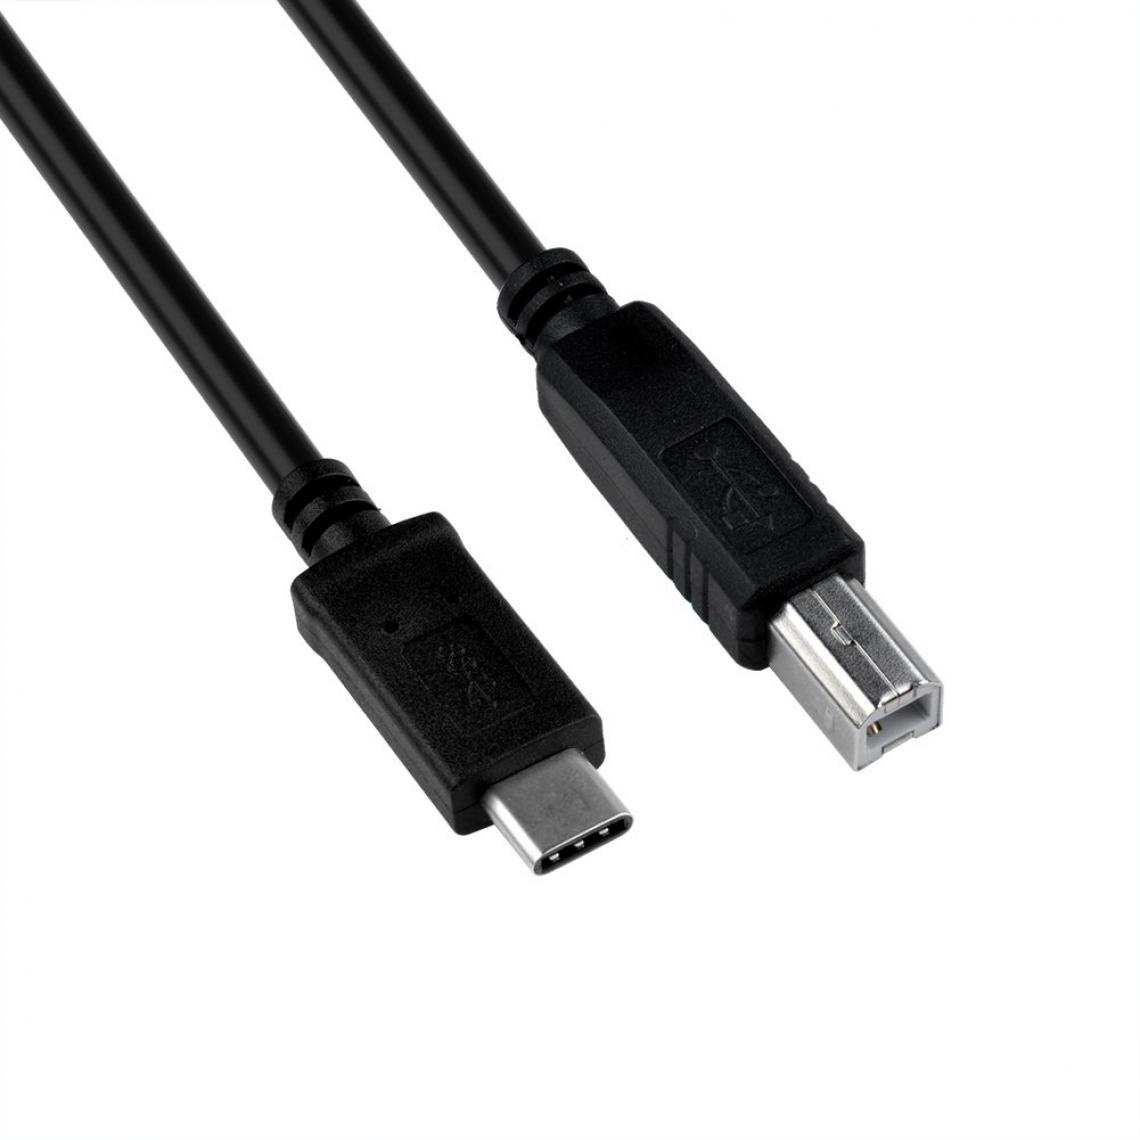 Ineck - INECK - Cable Imprimante USB C Male vers USB B Male Cable Printer Type C Imprimante Compatible - Câble antenne